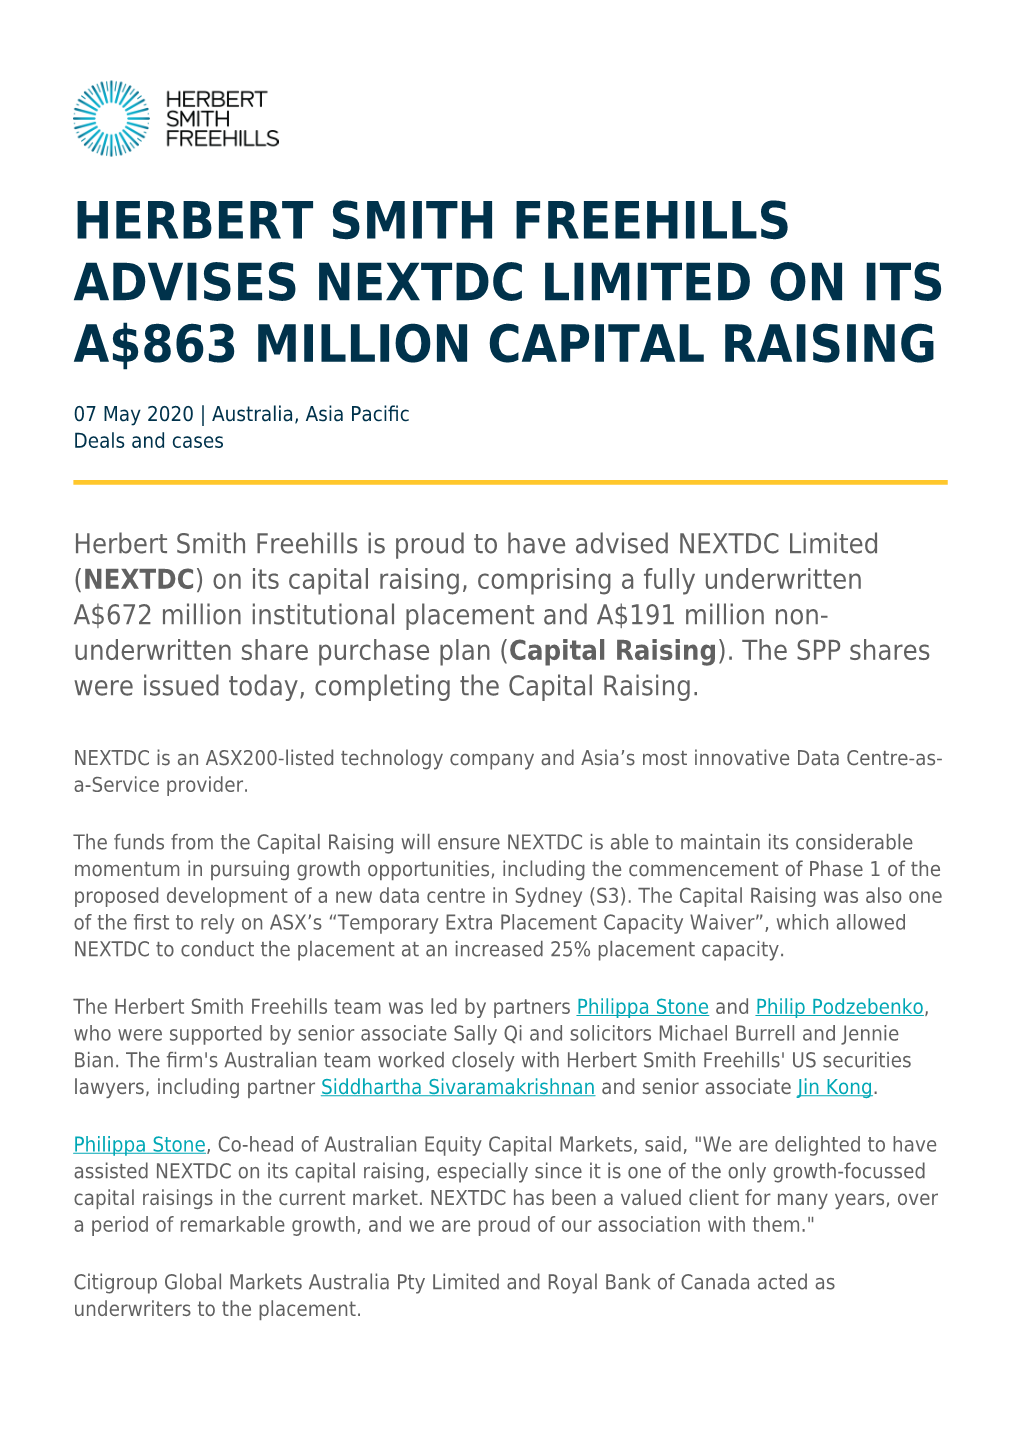 Herbert Smith Freehills Advises Nextdc Limited on Its A$863 Million Capital Raising